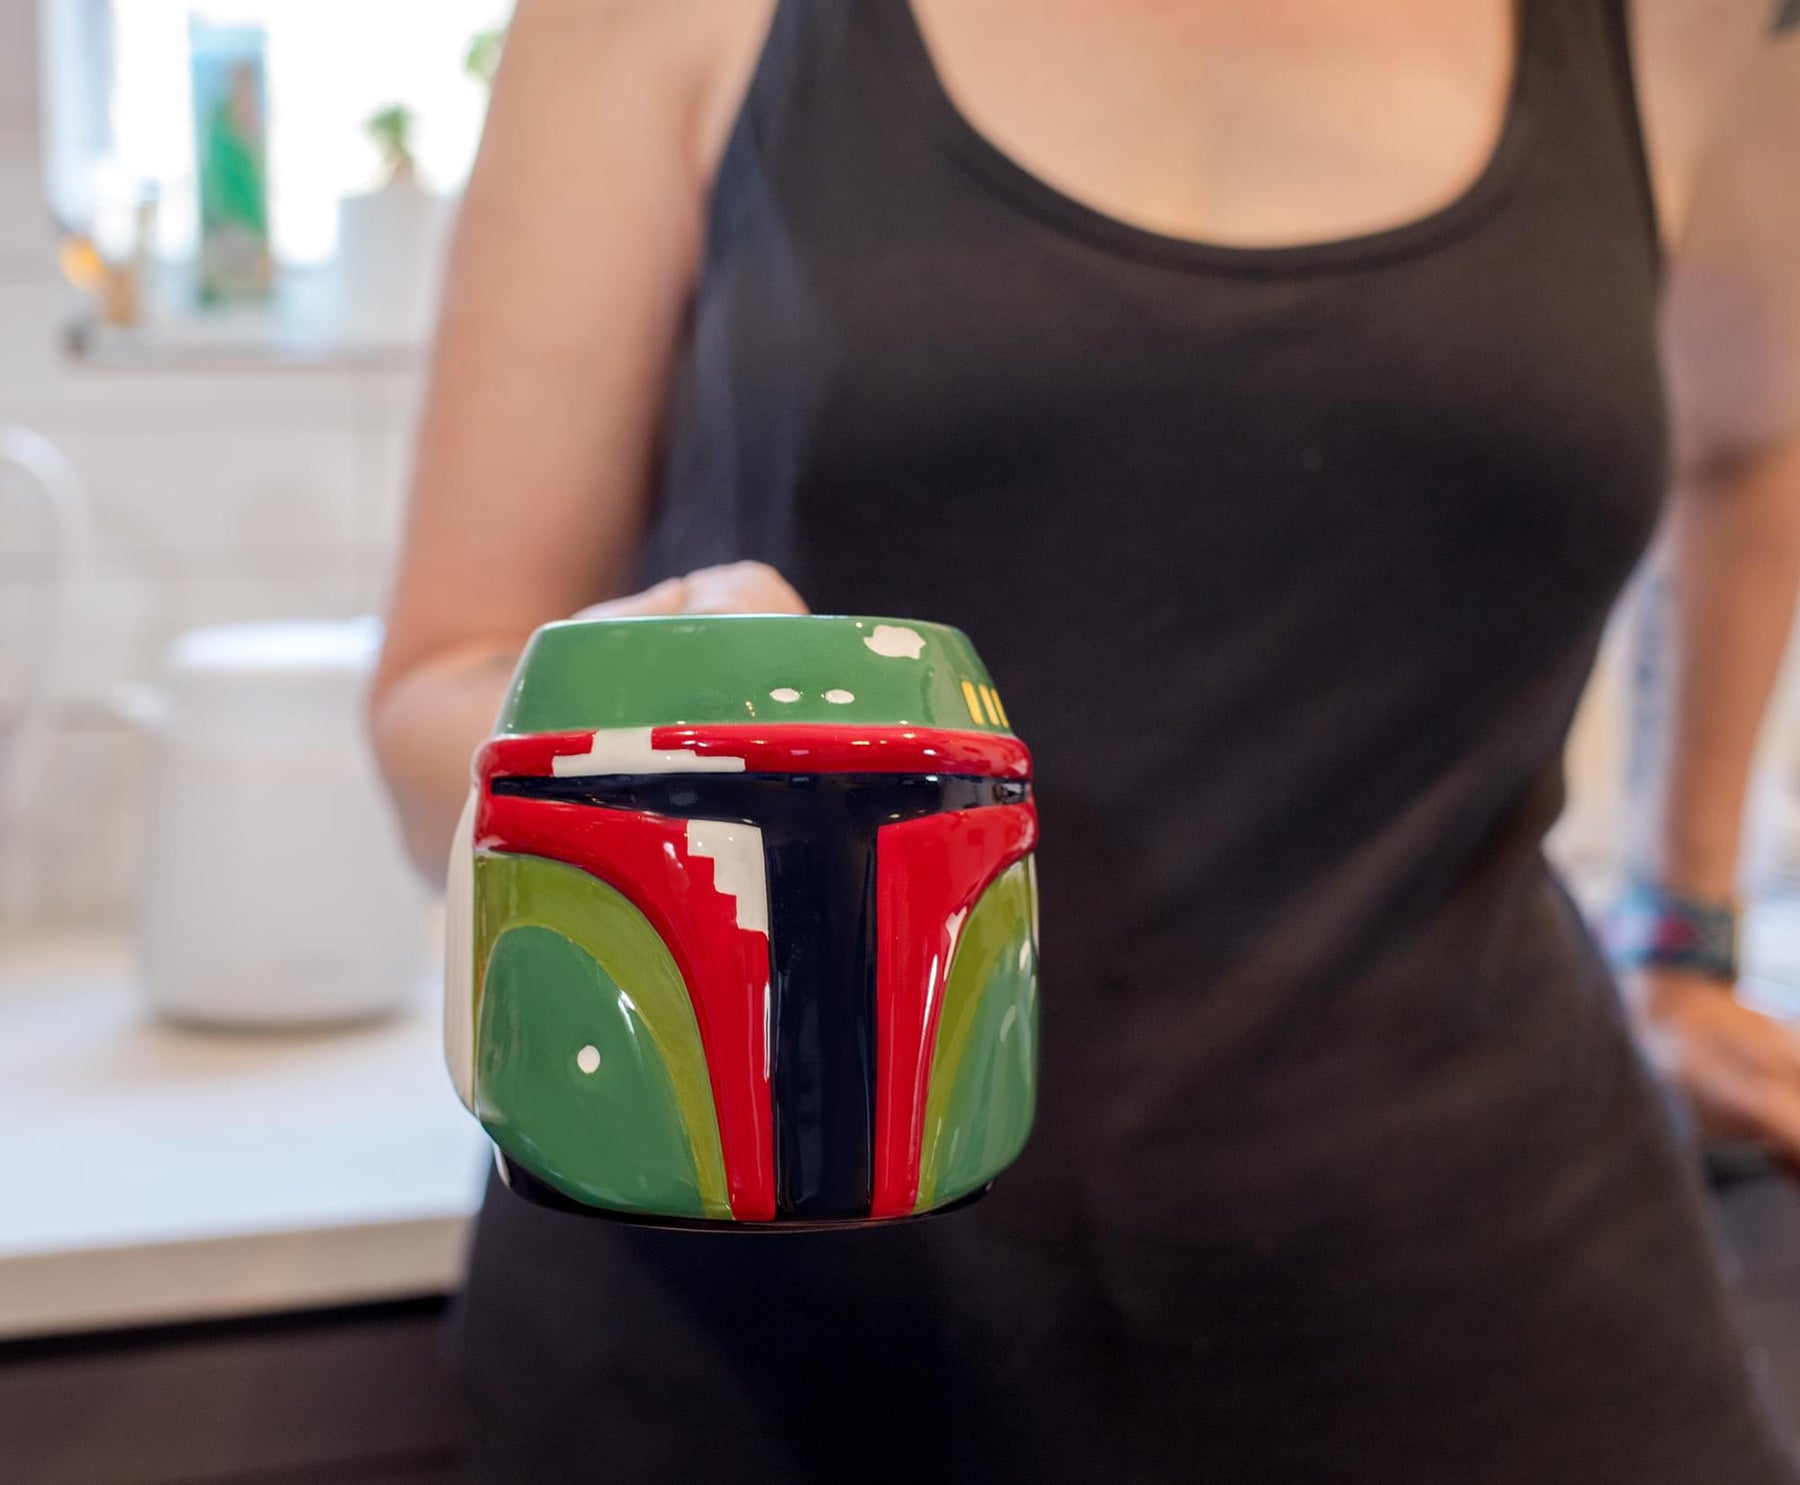 Star Wars 3D Sculpted Boba Fett Helmet Ceramic Mug | Holds 20 Ounces